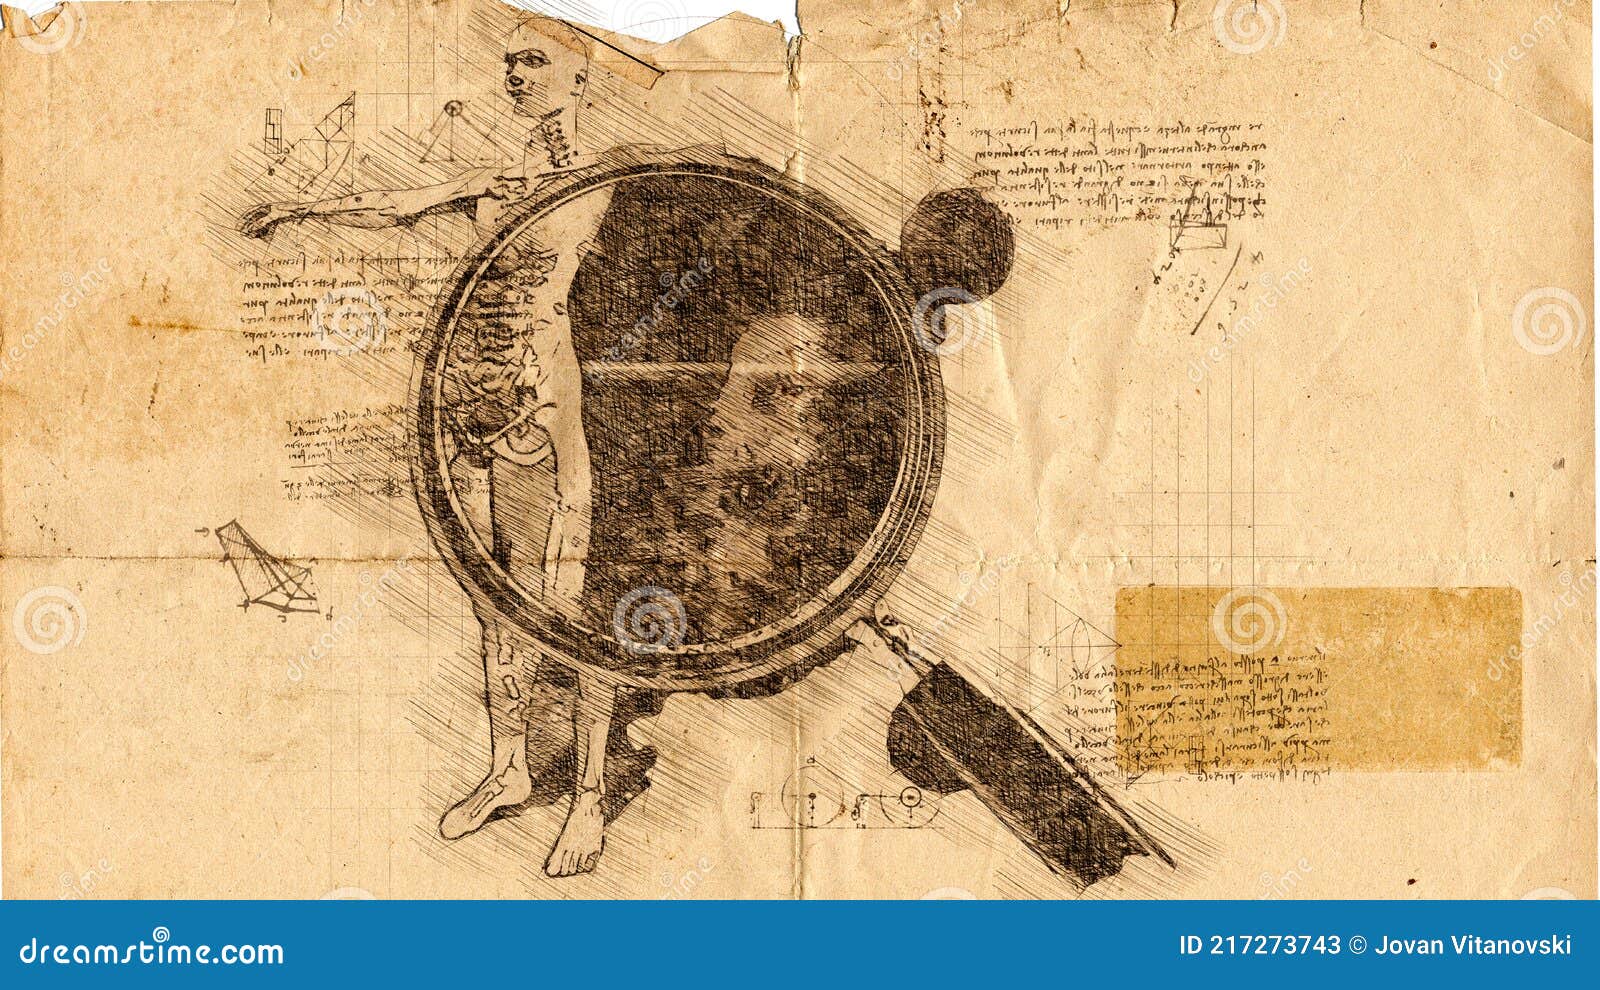 anatomy of man under magnifying glass in leonardo da vinci style